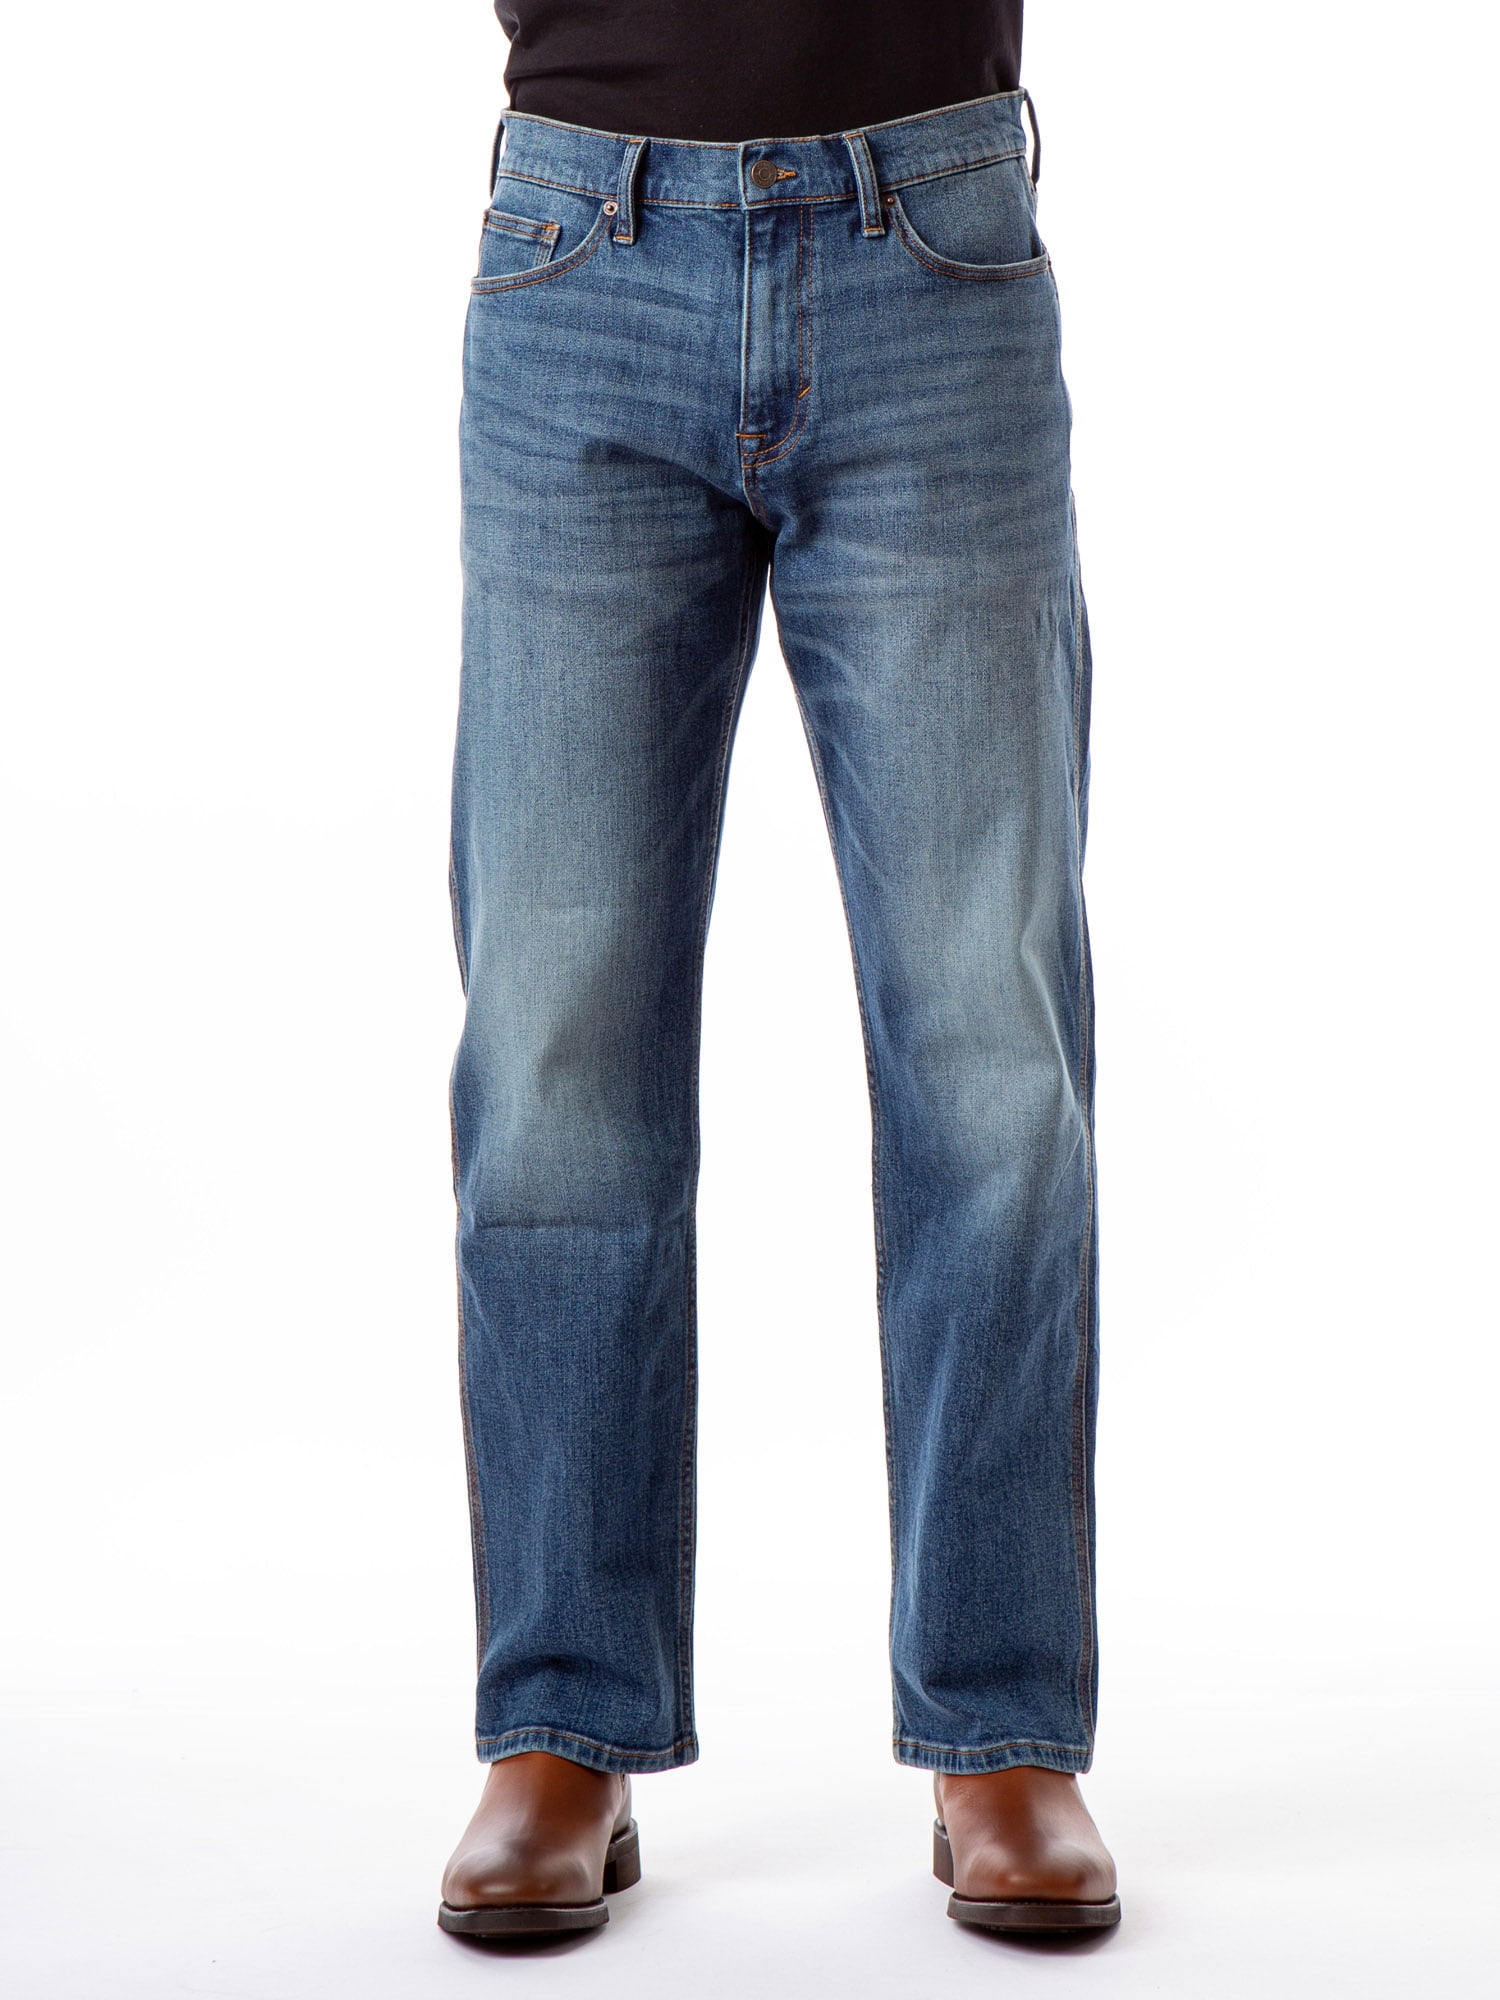 Jordache Vintage Mens Alec Relaxed Fit Baggy Jeans, Waist Sizes 29